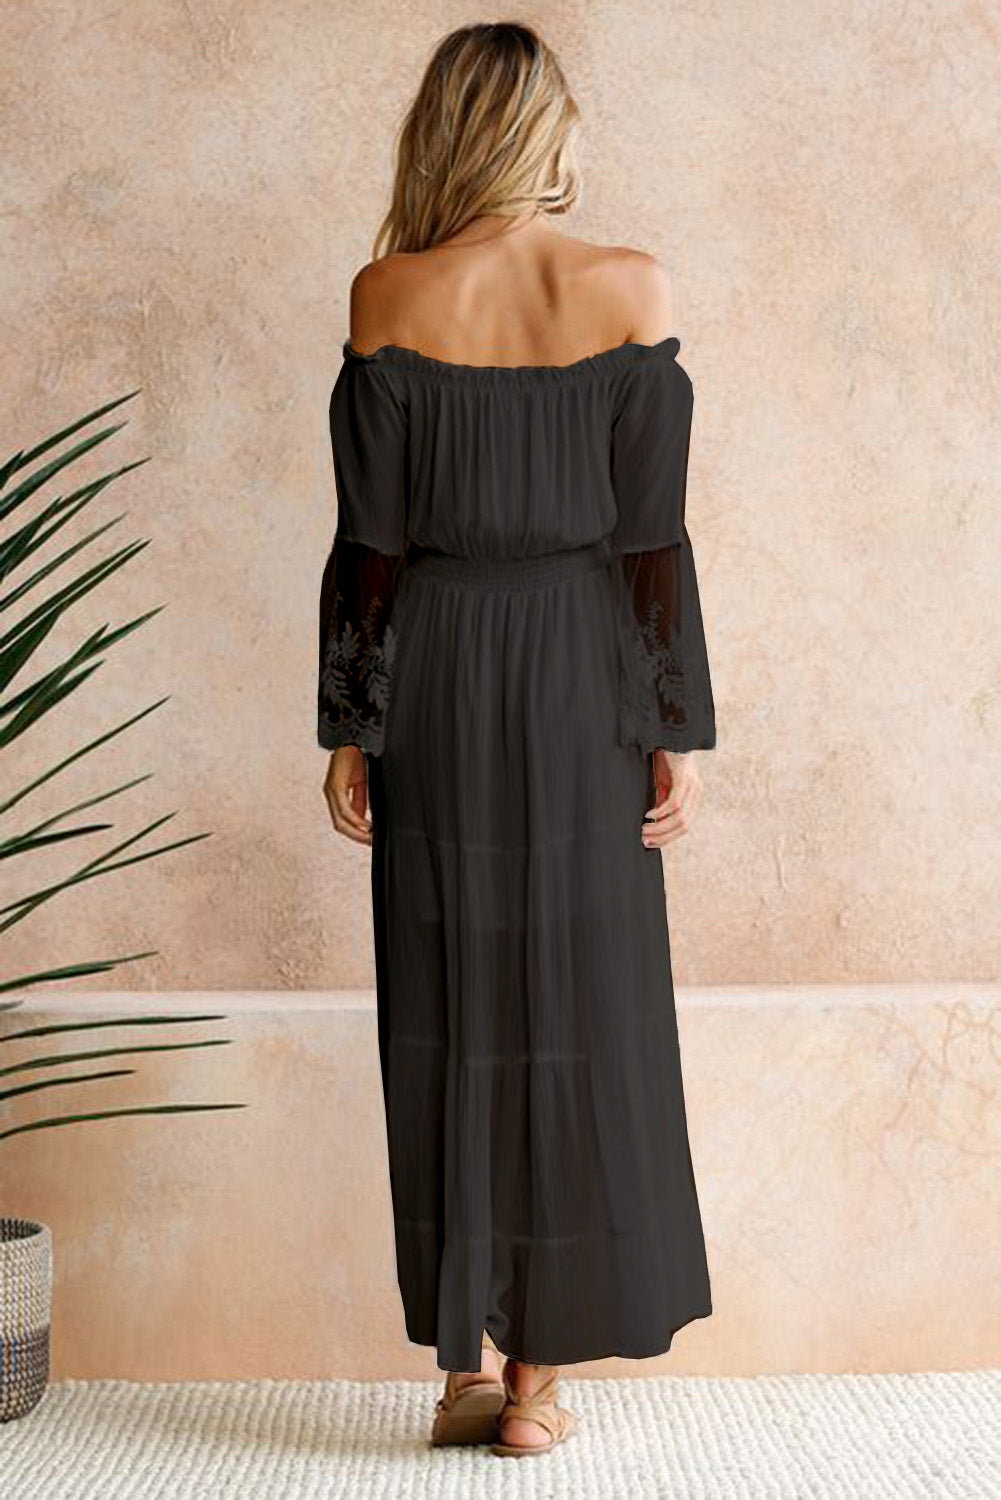 Black White Maxi Dress Off Shoulder Flared Sleeve Lace Wedding Bridesmaid Dress LC611985-2